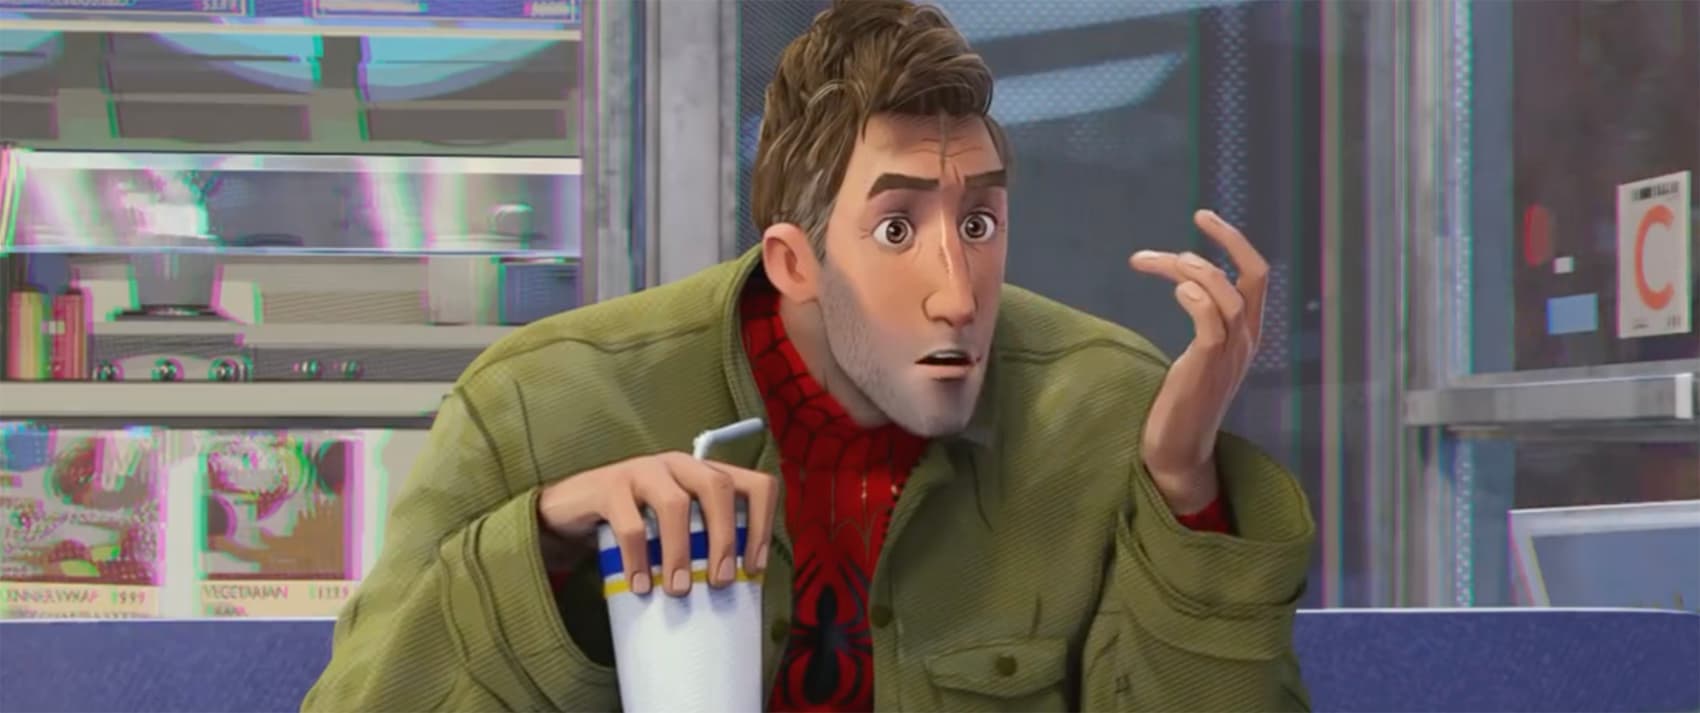 Peter Parker in "Spider-Man: Into the Spider-Verse"